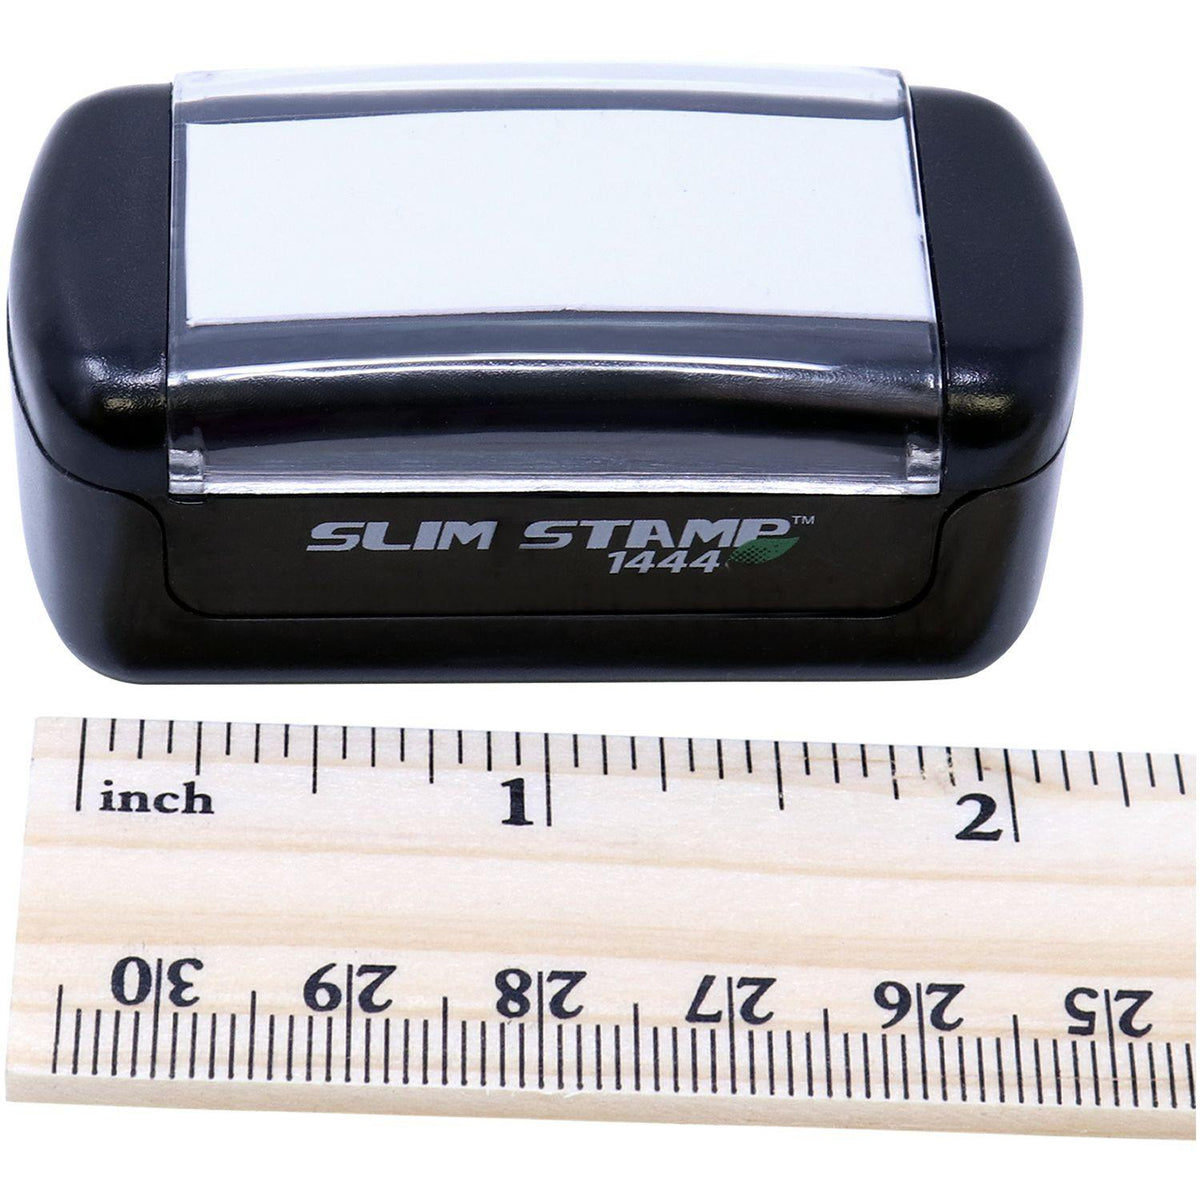 Measurement Slim Pre-Inked Great Job Stamp with Ruler